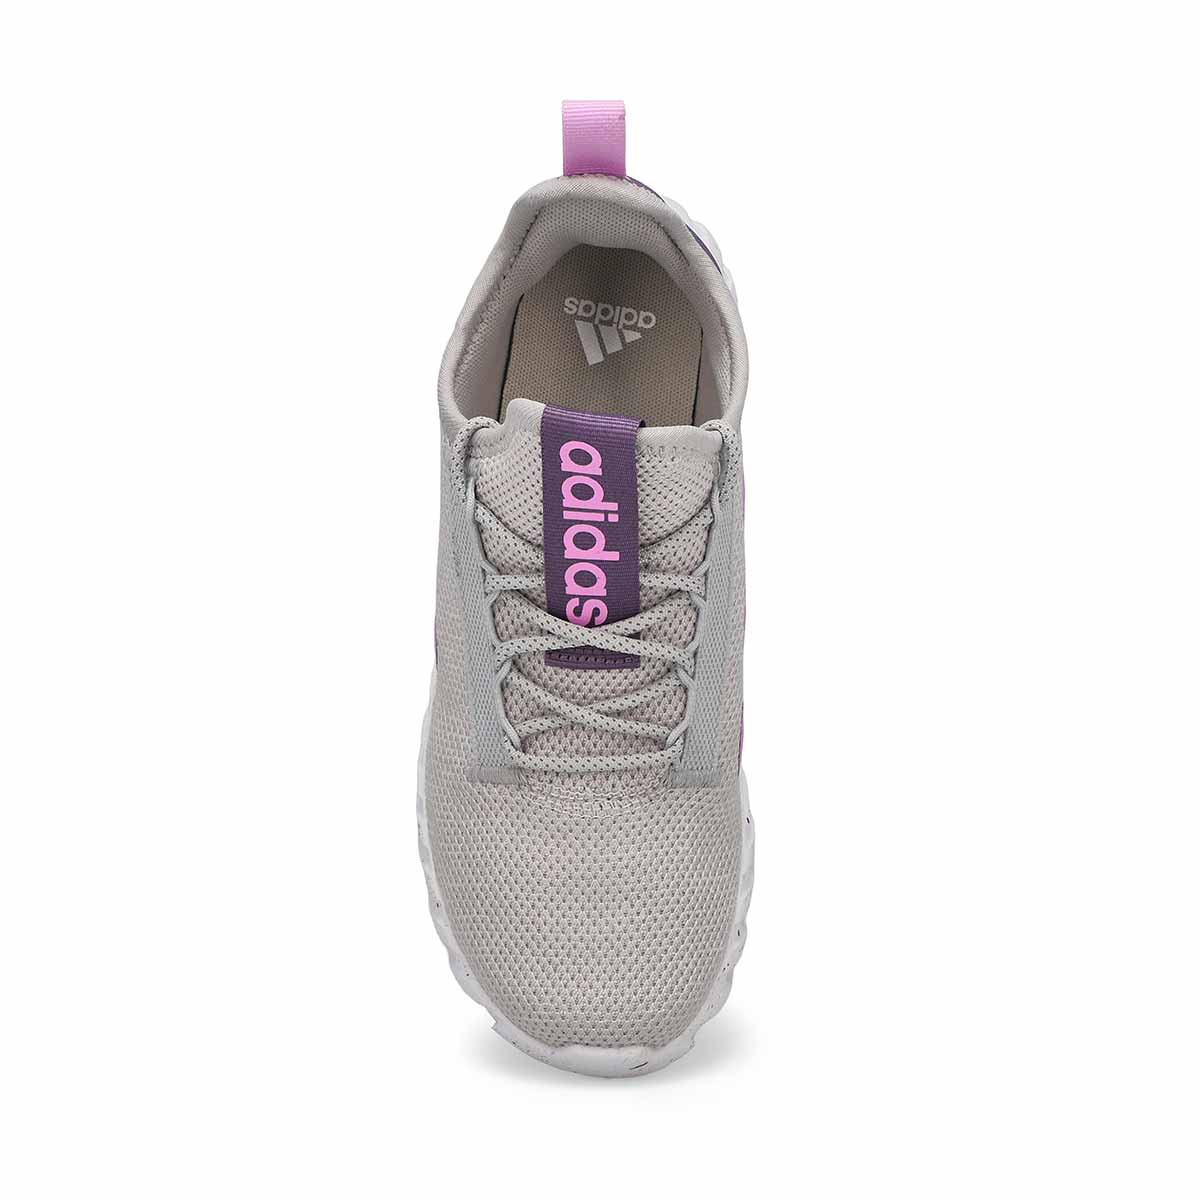 Girls'  Kaptir 3.0 K Sneaker - Grey/Pink/Violet